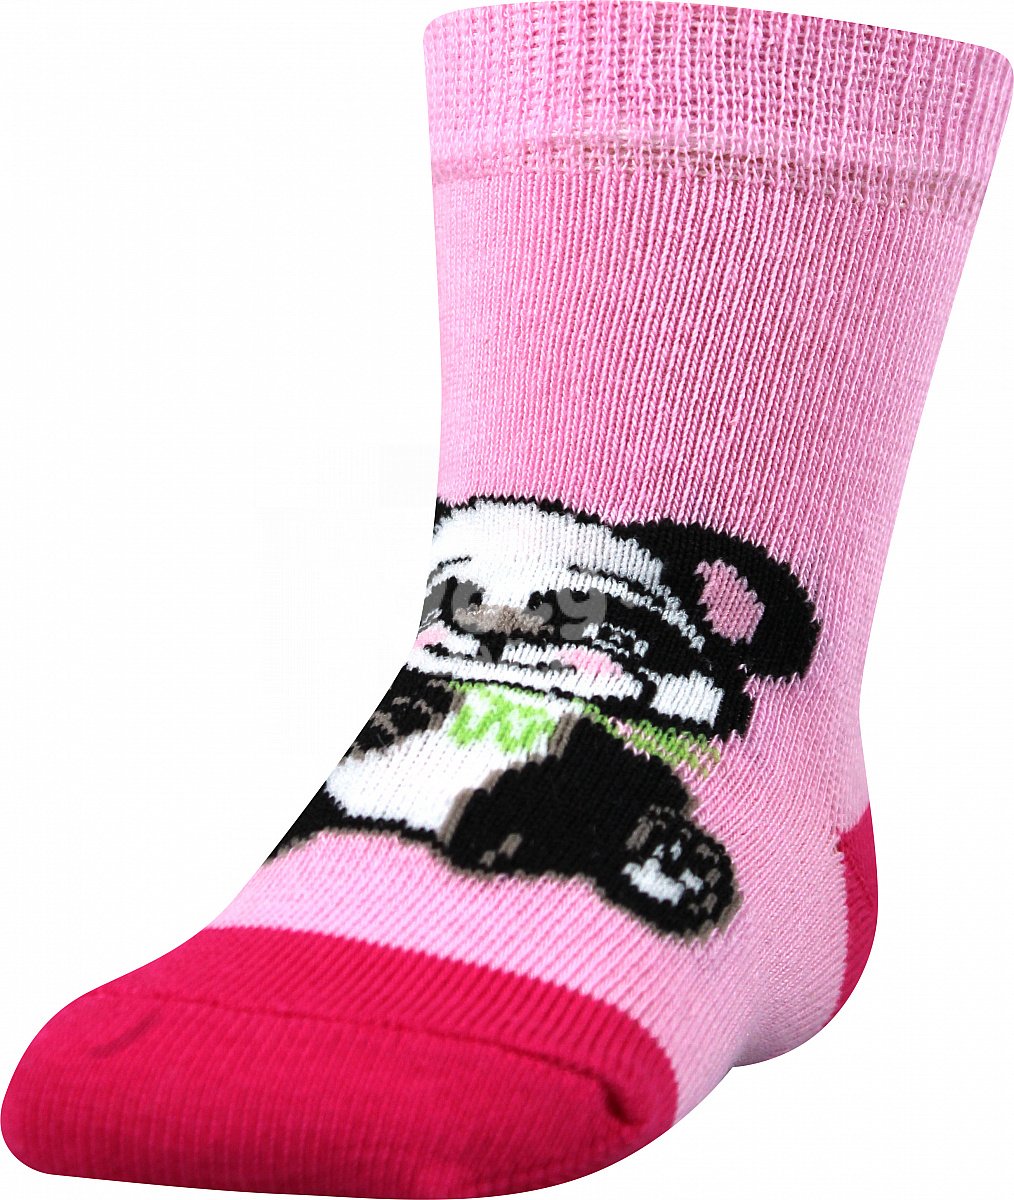 Ponožky Filípek 01 ABS 3 páry holka